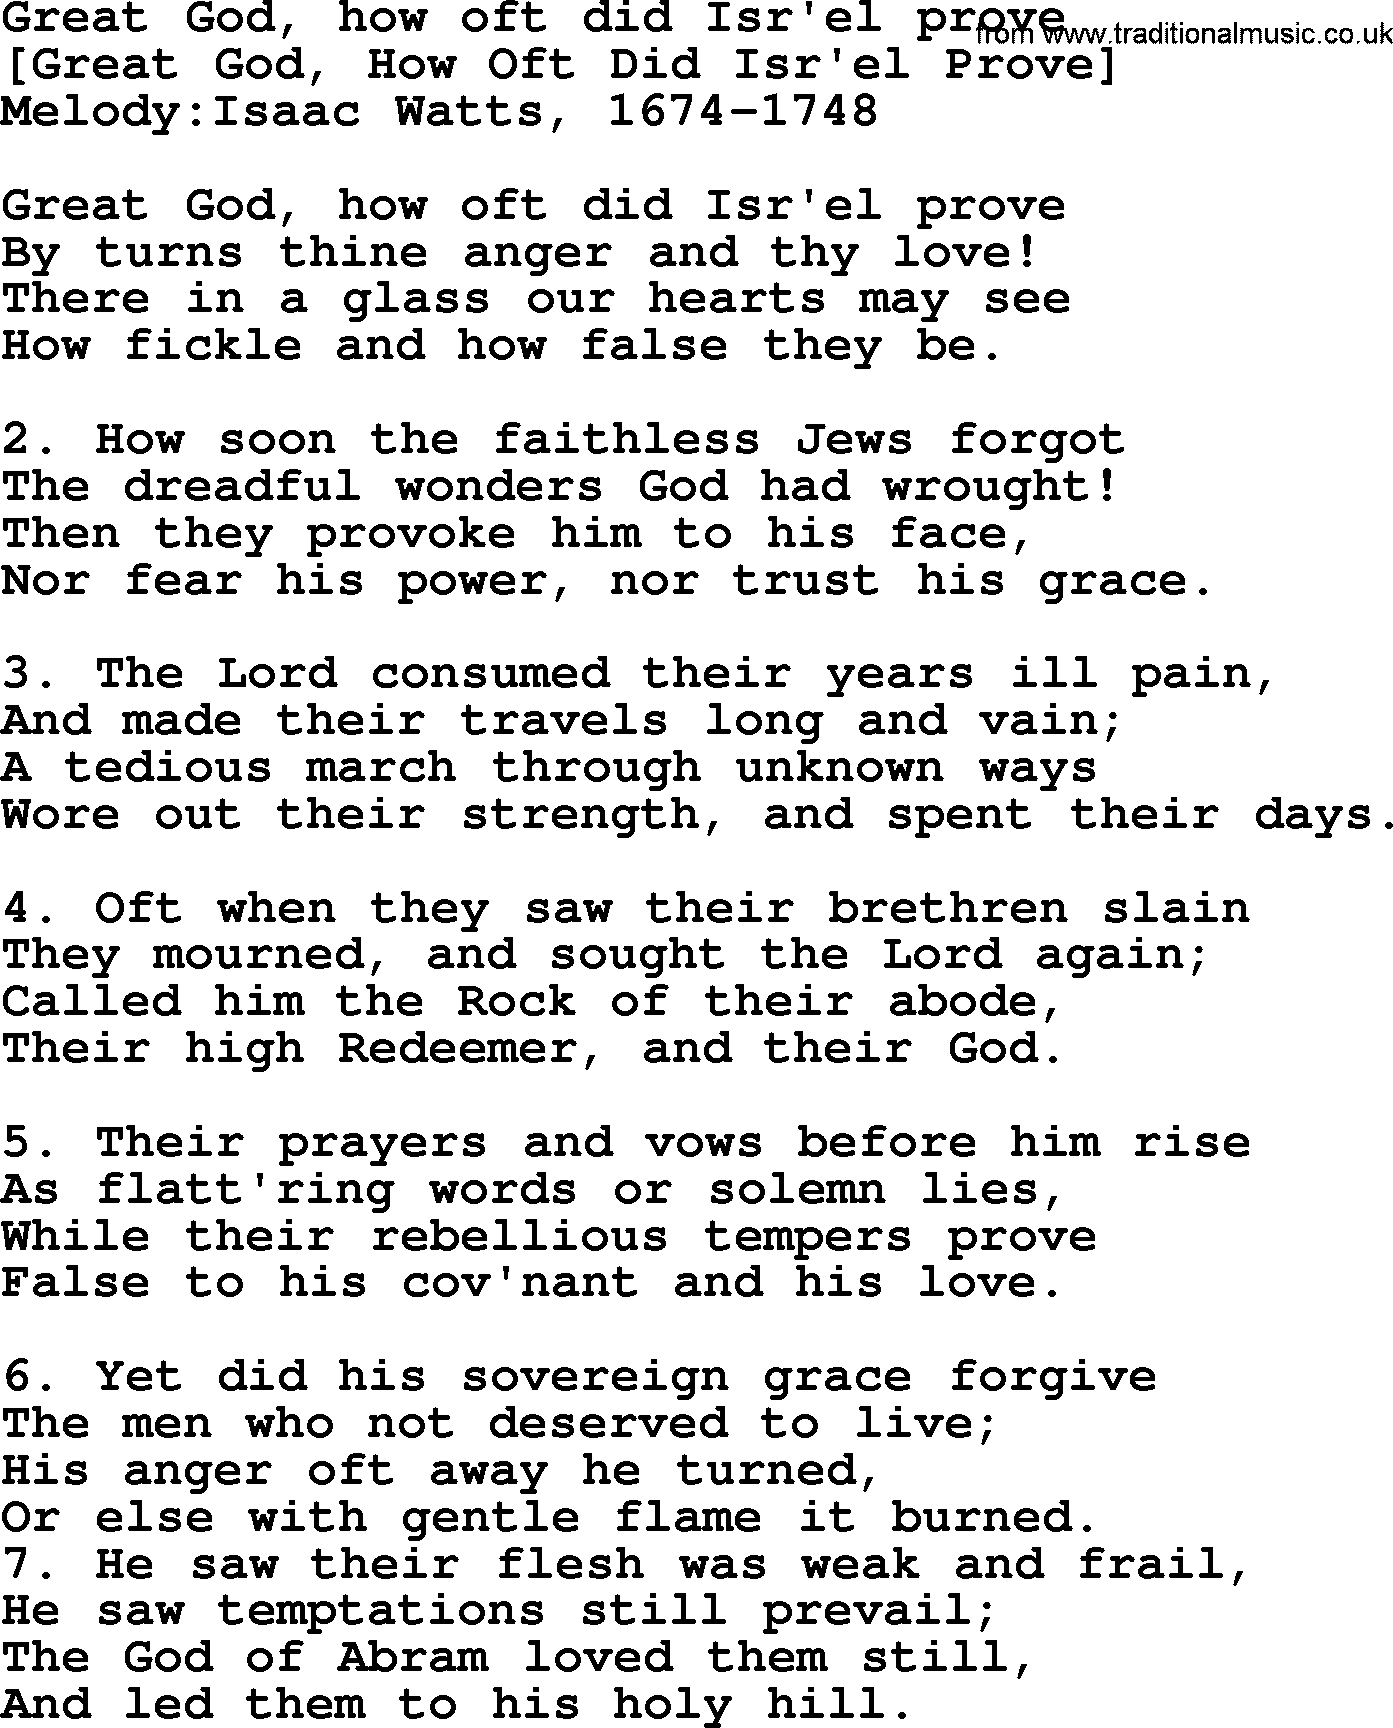 Old English Song: Great God, How Oft Did Isr'el Prove lyrics